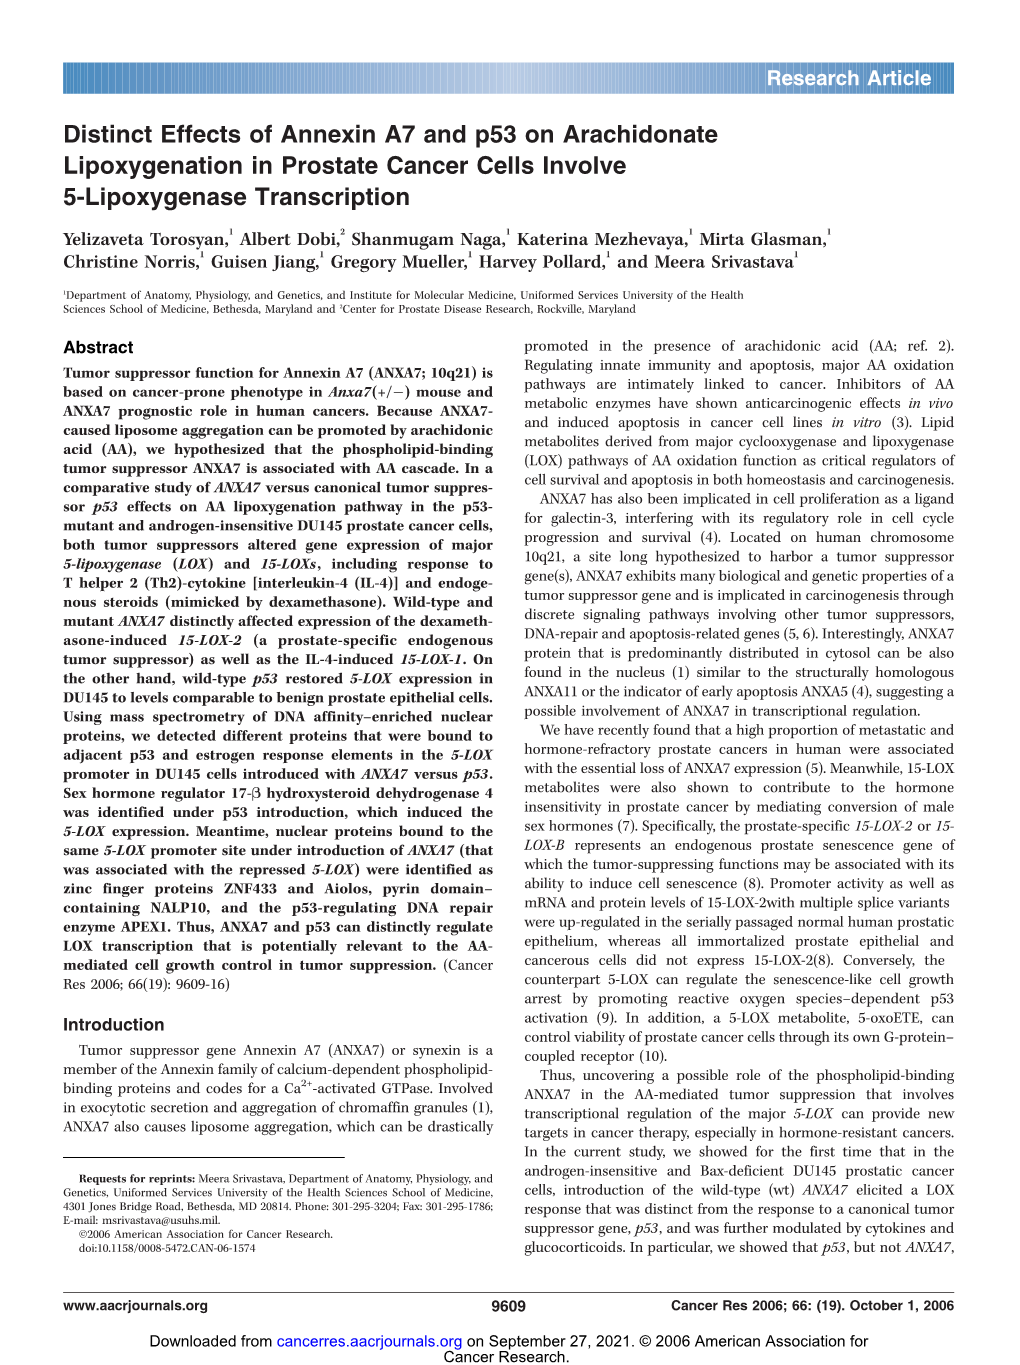 Distinct Effects of Annexin A7 and P53 on Arachidonate Lipoxygenation in Prostate Cancer Cells Involve 5-Lipoxygenase Transcription